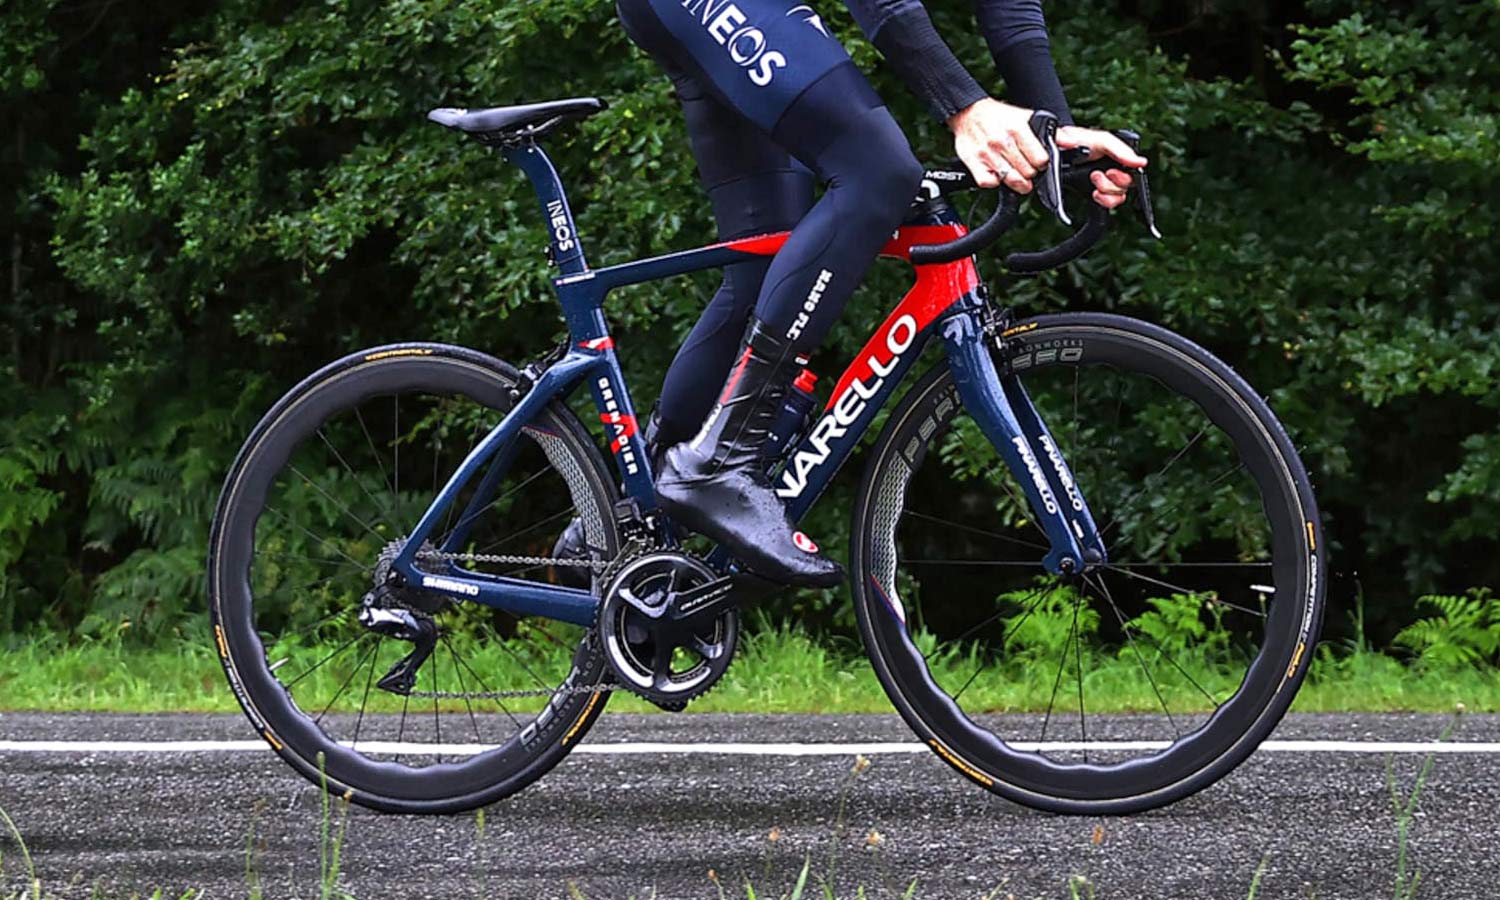 Princeton CarbonWorks Peak 4550 Launch Edition lightweight carbon aero road wheels, Team INEOS Grenadiers Tour de France tubular training